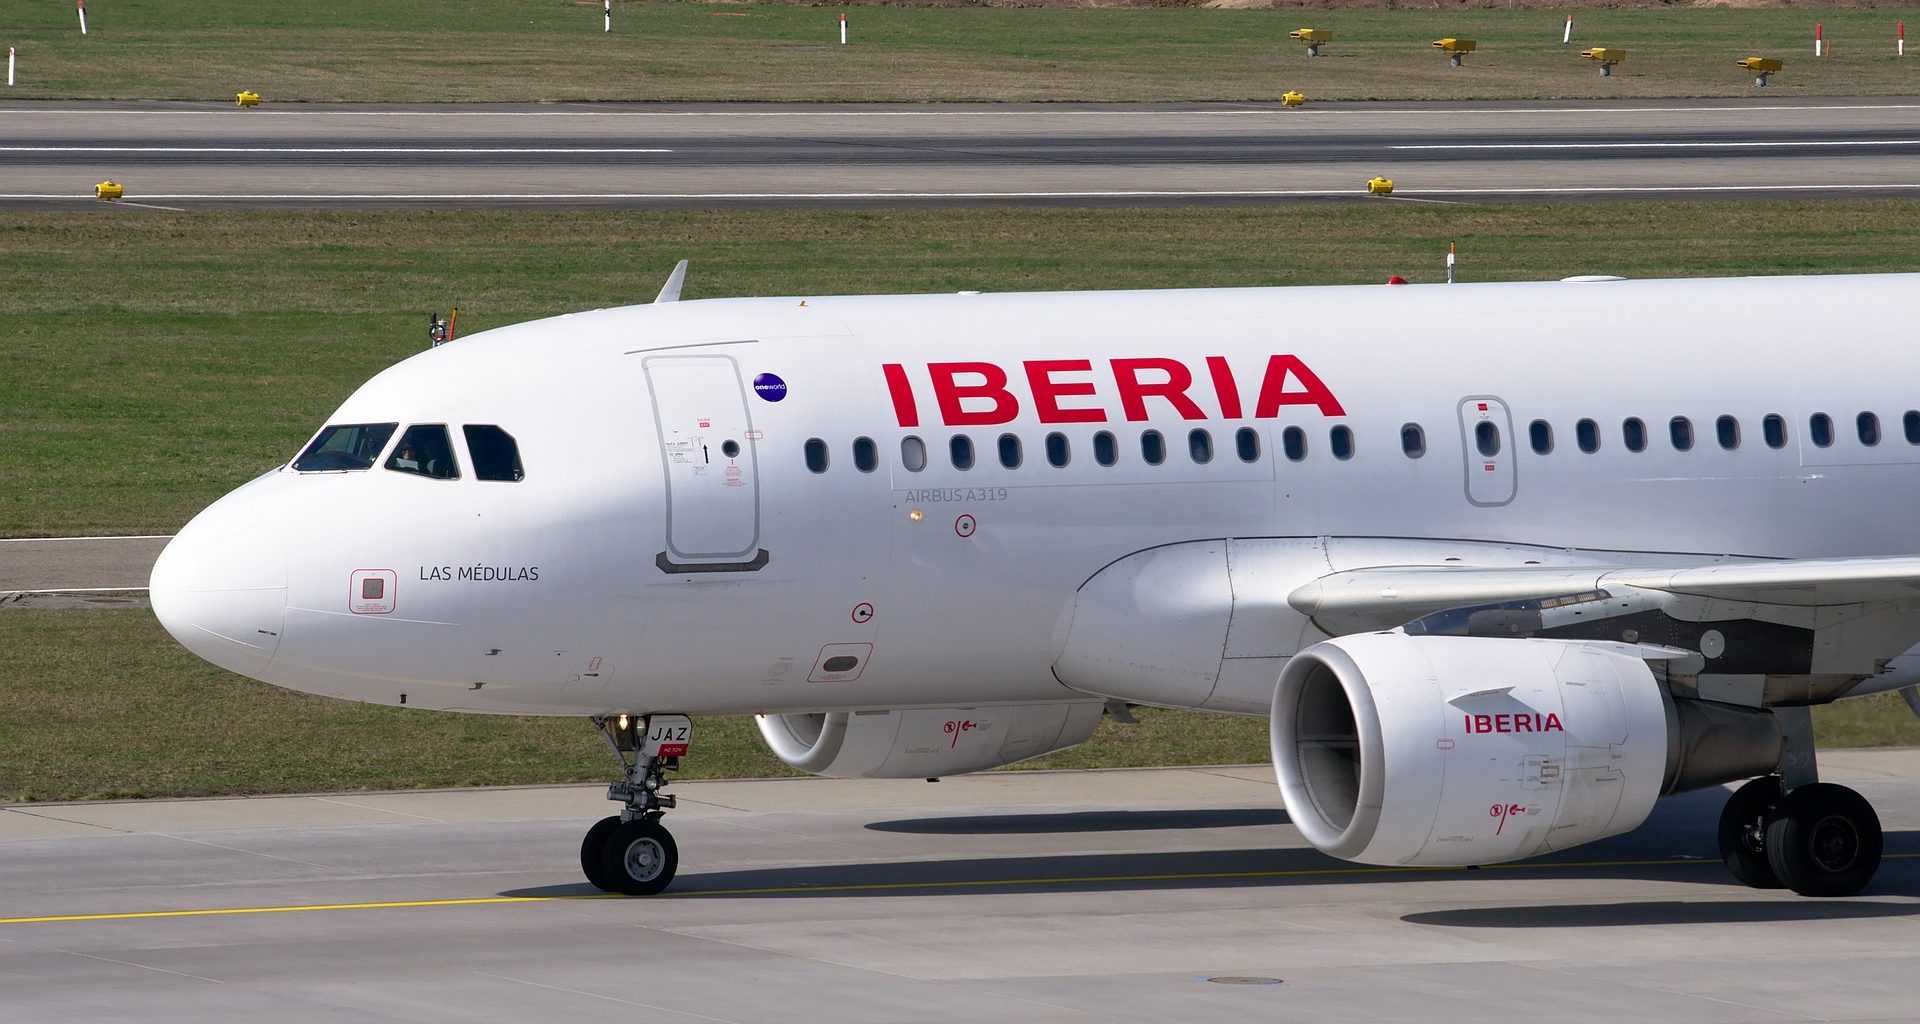 Iberia airlines plane on tarmac.